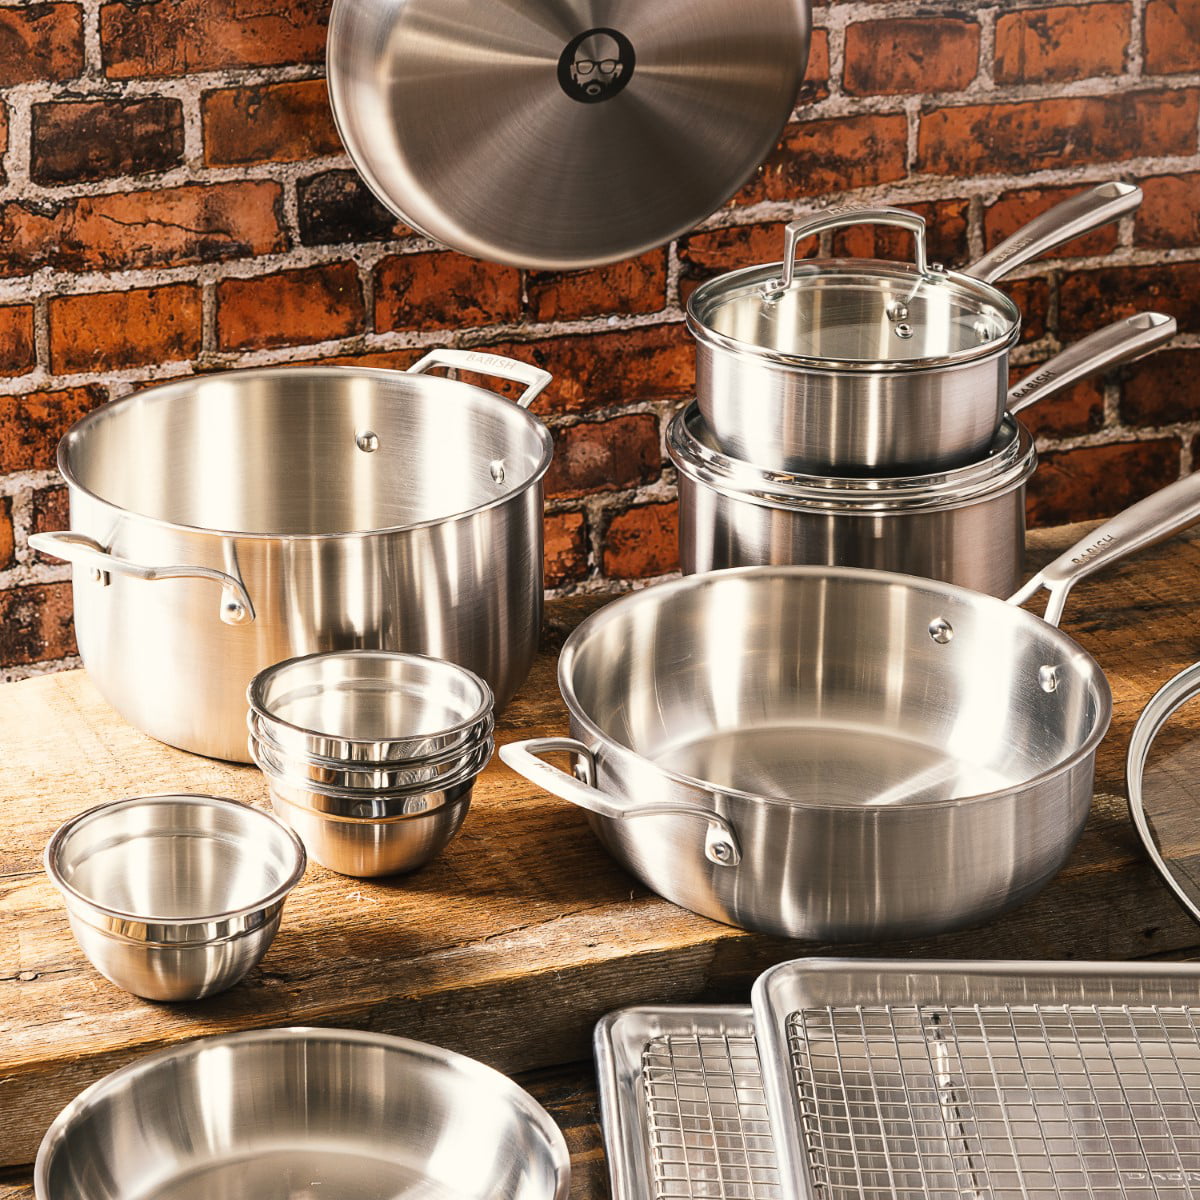 Babish Cookware Set, Essential, 12 Pieces